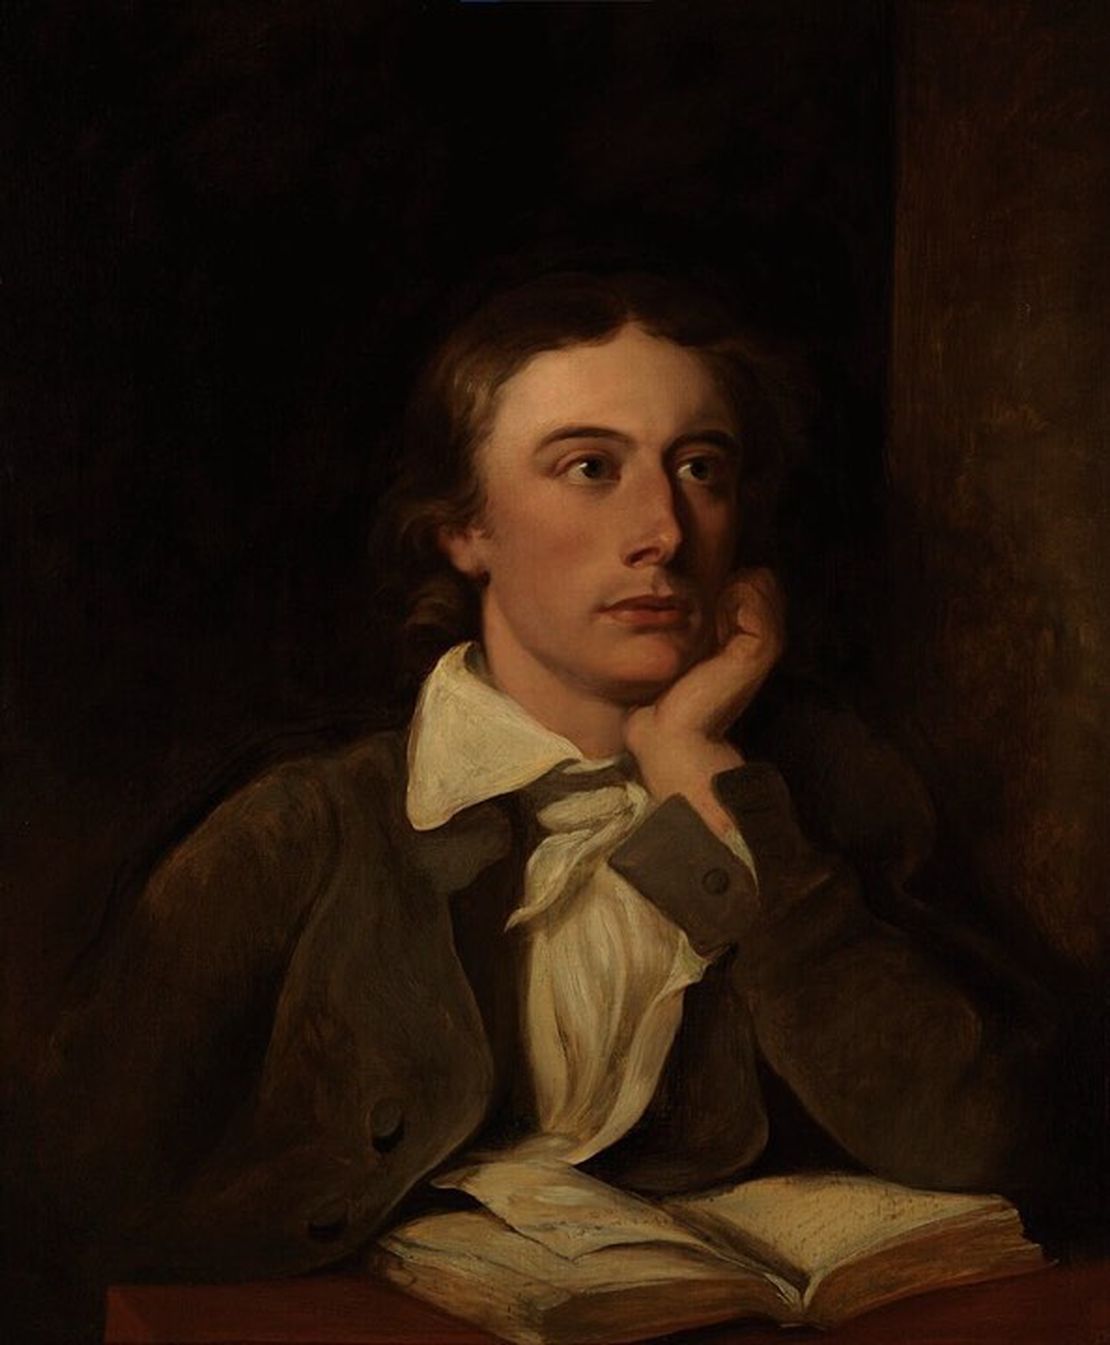 John Keats writes his poem, On a Lock of Miltons Hair